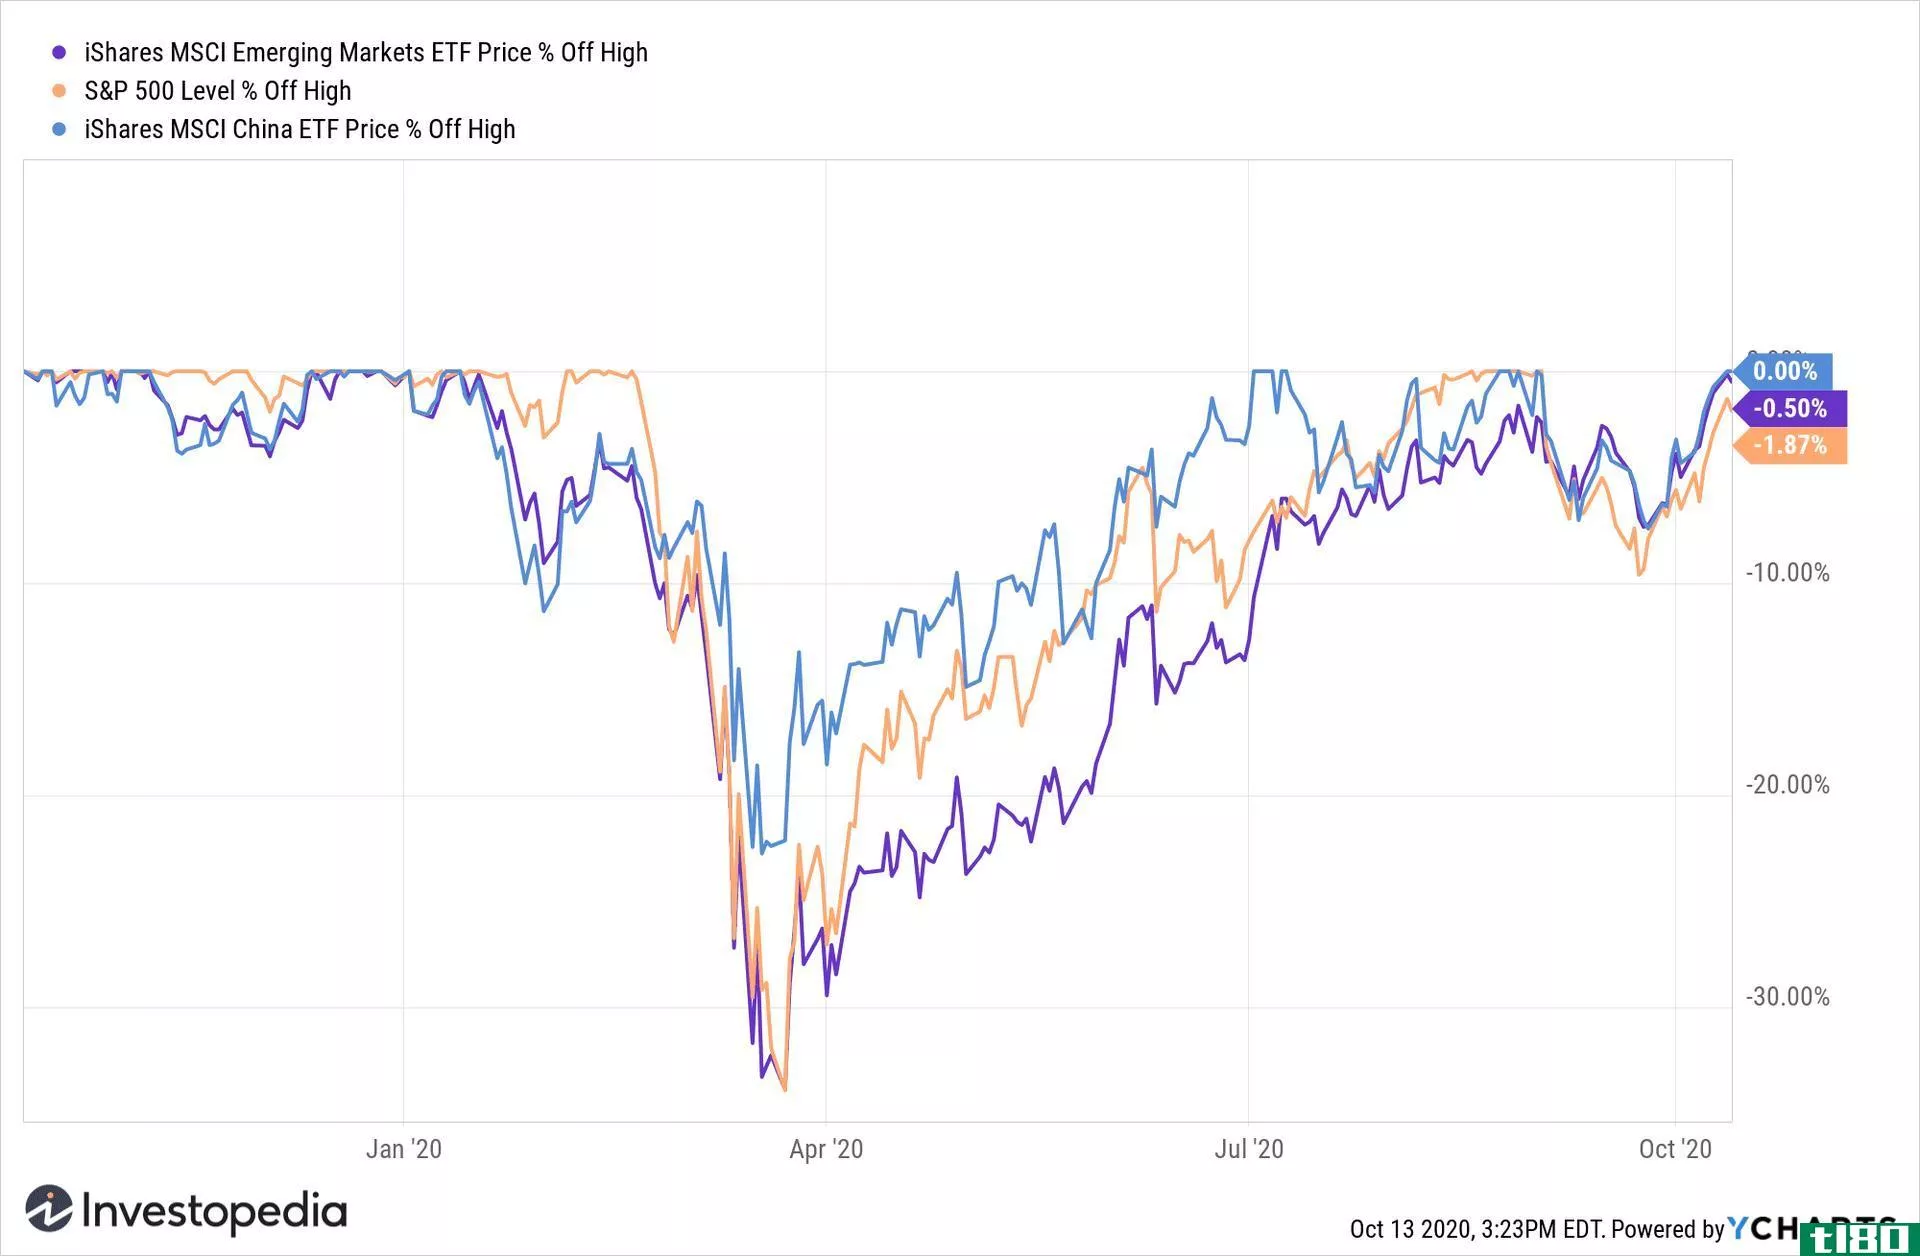 S&P 500 price vs iShares MSCIEmerging Markets ETF price vs. iShares MSCI ETF price